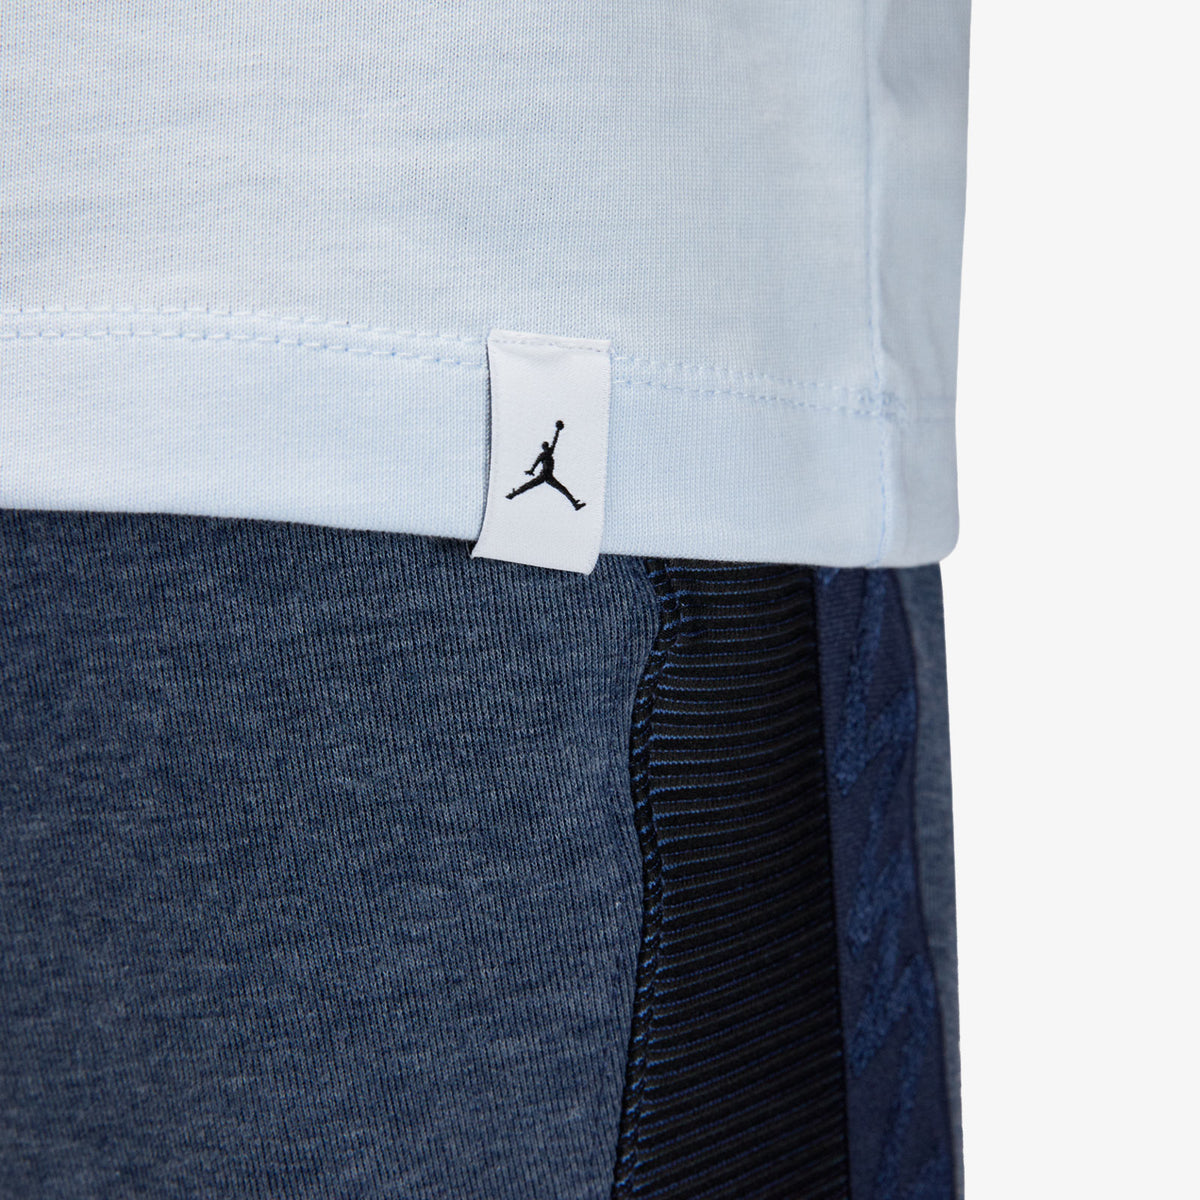 Jordan X Zion Seasonal T-Shirt - Blue